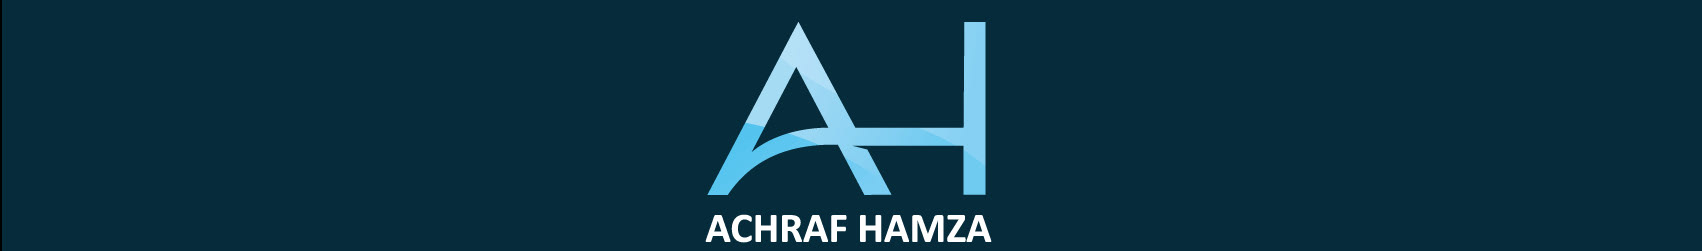 achraf hamza's profile banner